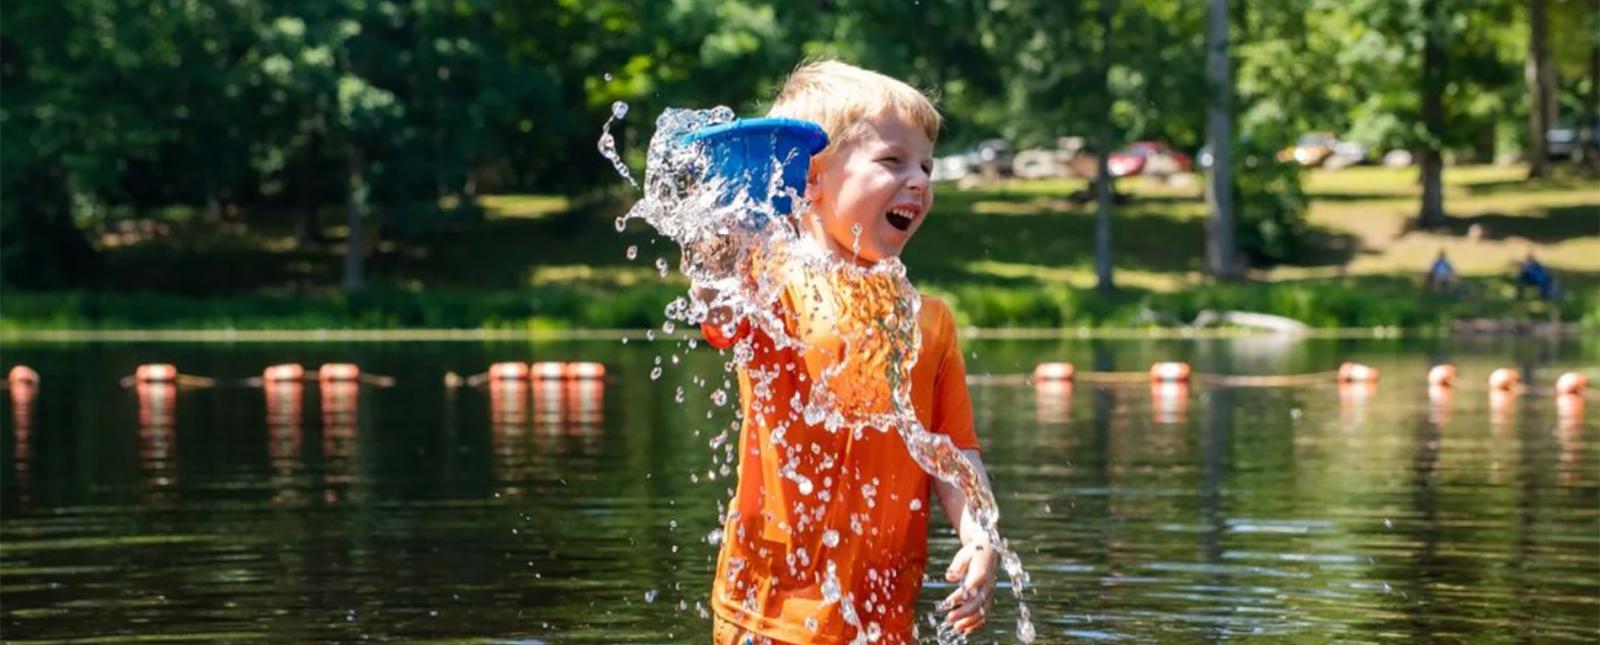 Un niño chapoteando juguetonamente en el agua (Instagram@rachela.higgins)